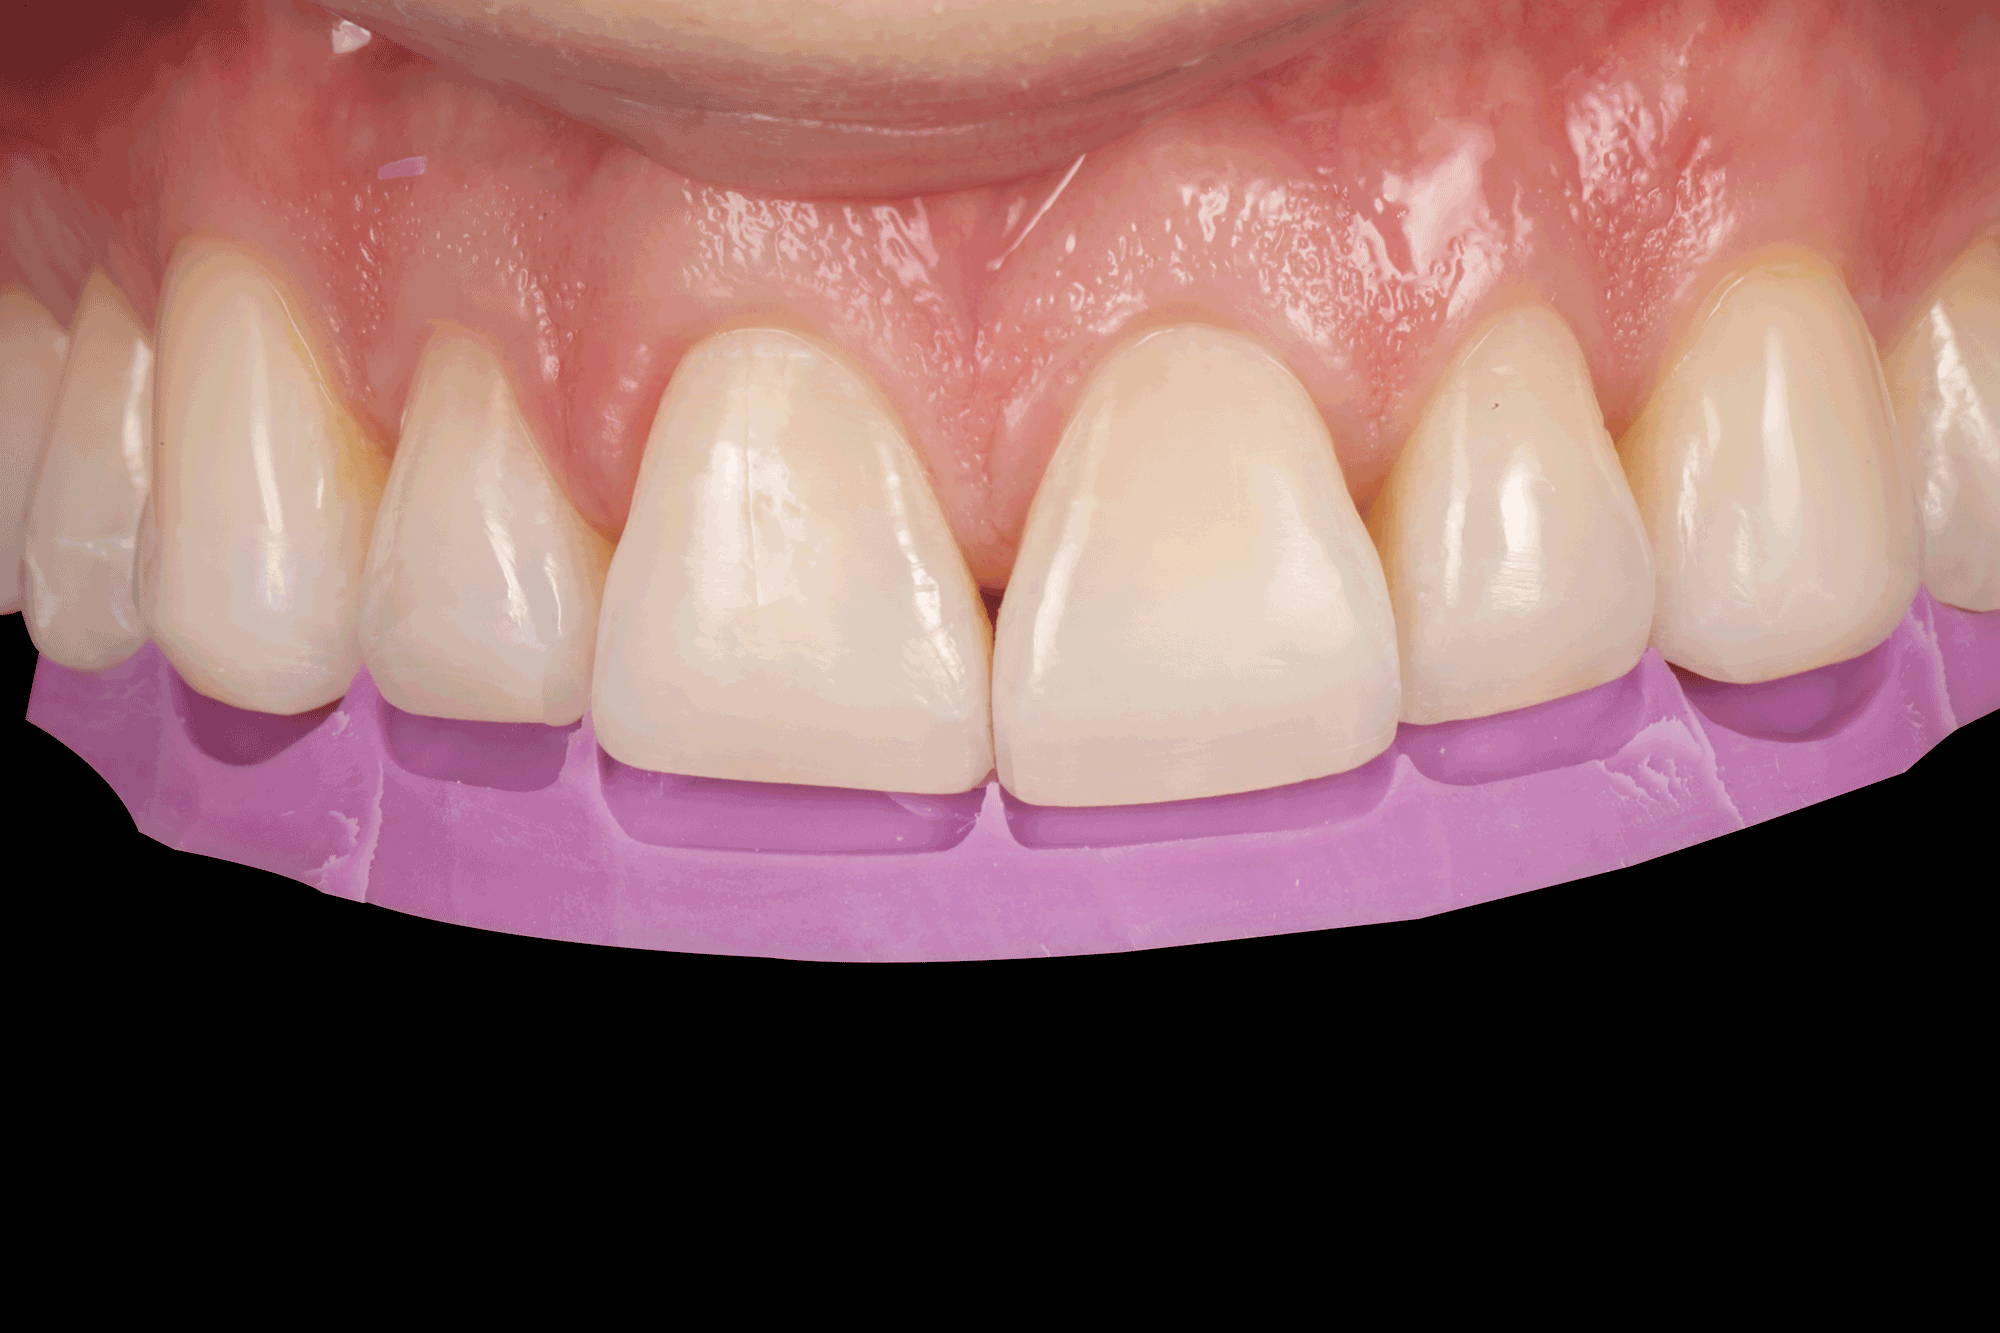 upper teeth in purple matrix material